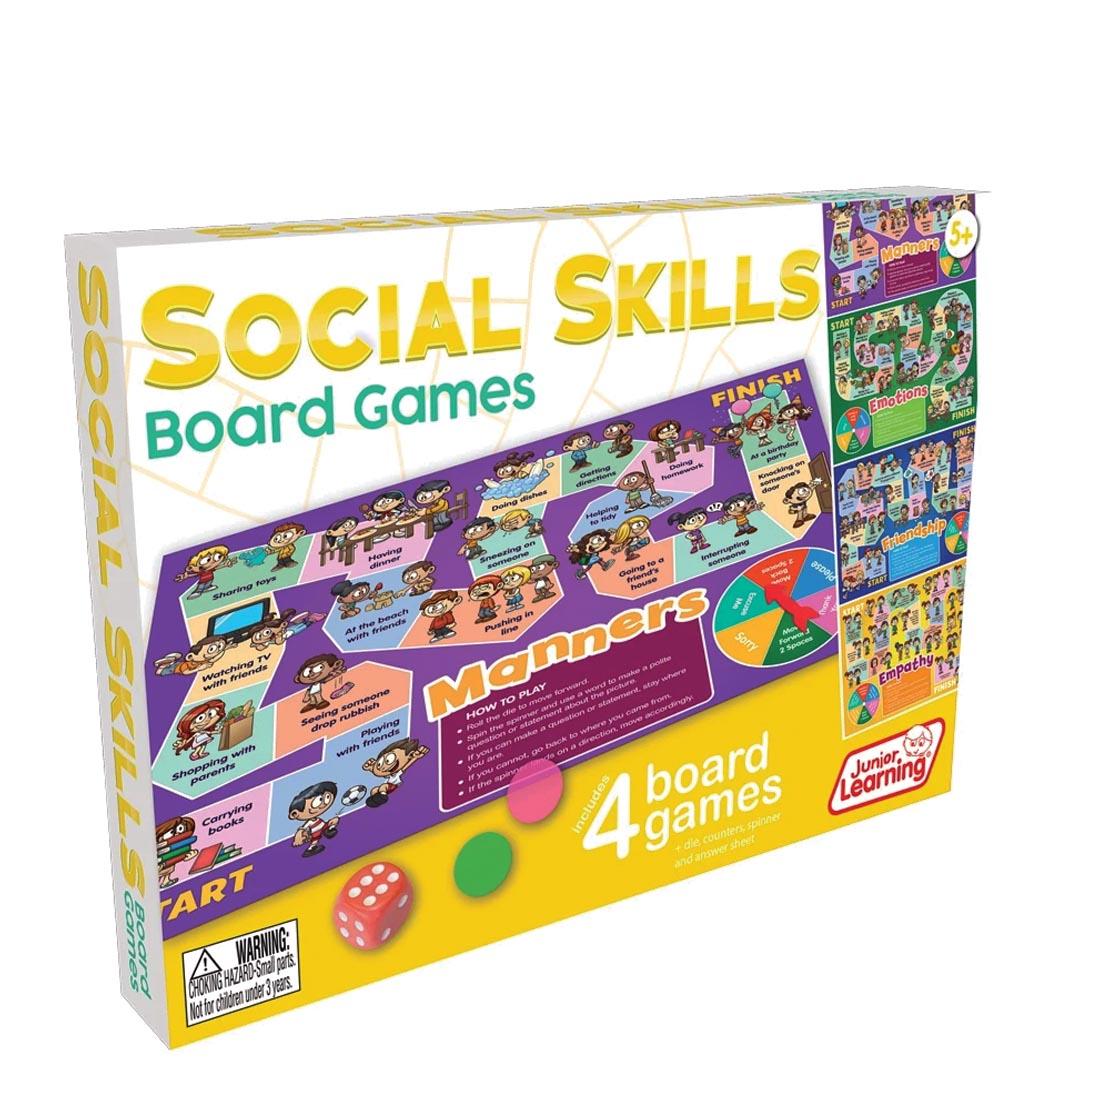 4 Social Skills Board Games by Junior Learning